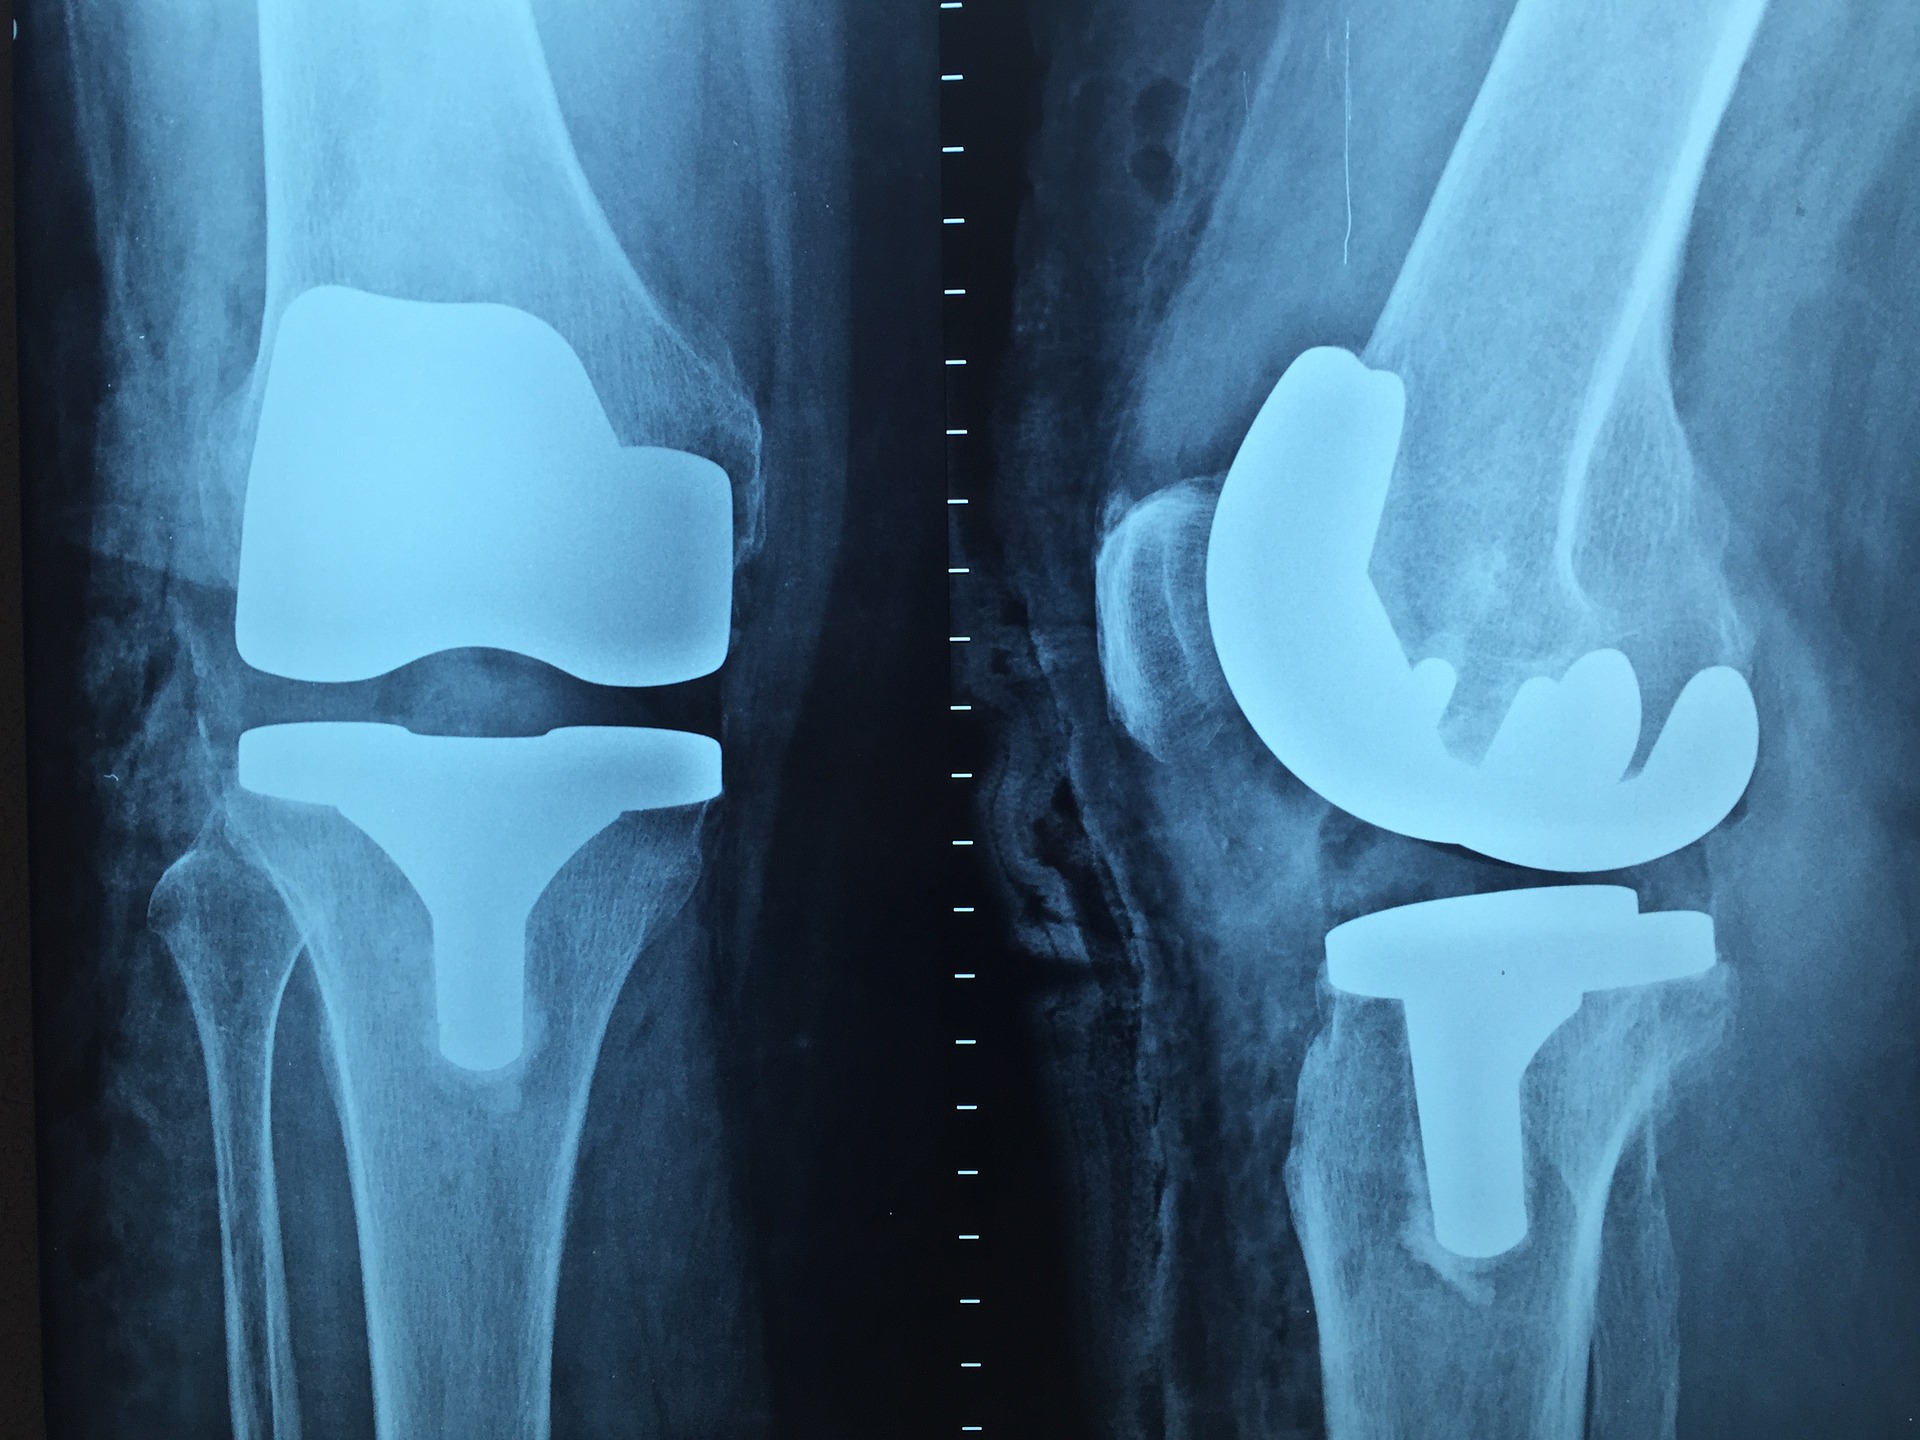 S bolestí zad a nohou na ortopedii